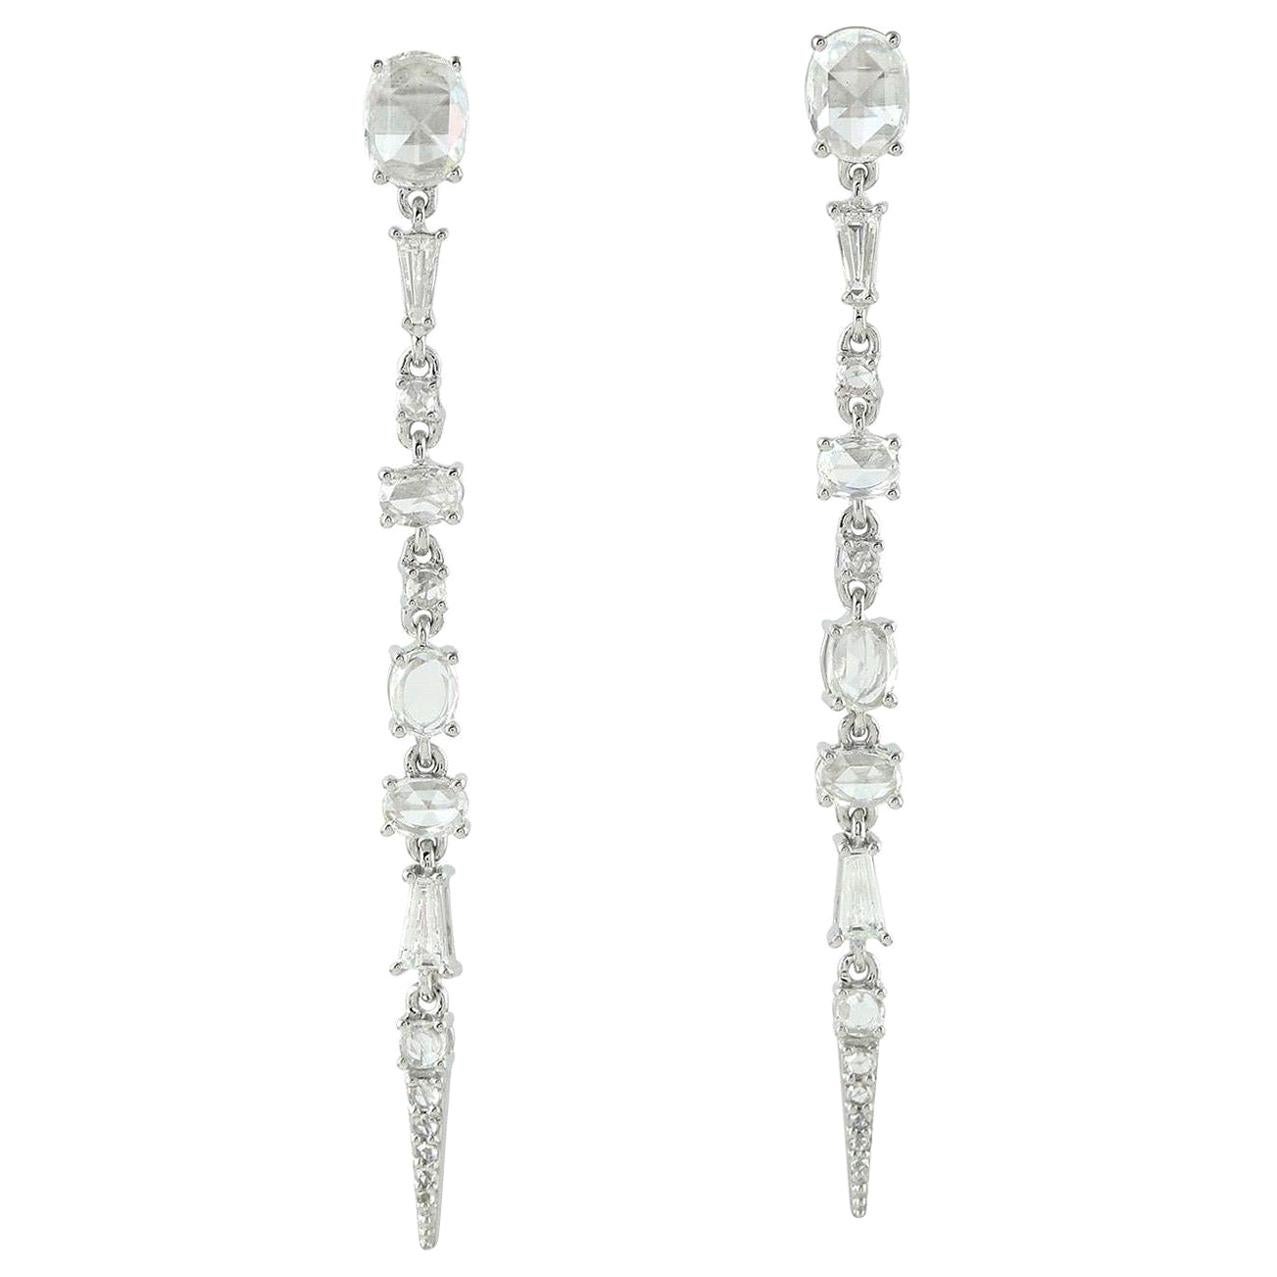 18 Karat Linear Diamond White Gold Earrings